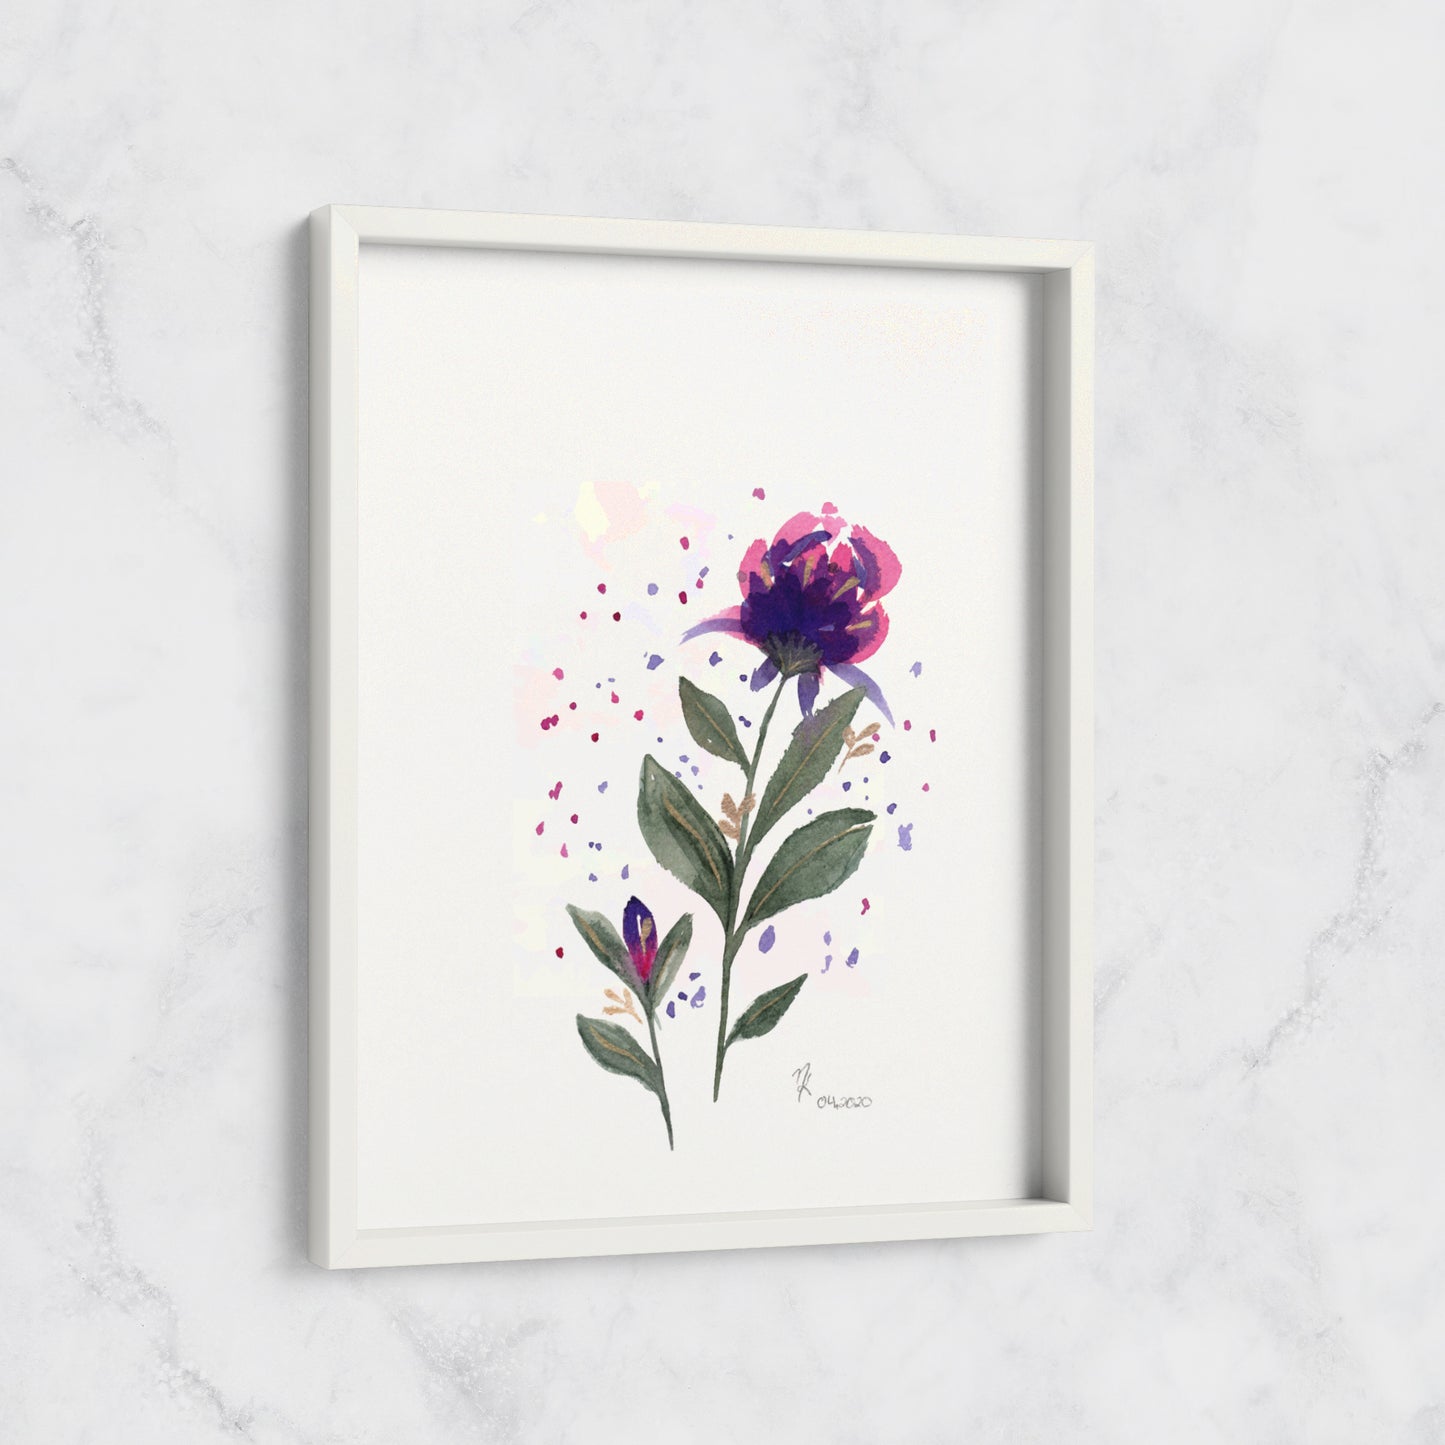 Twinkly Flower - Print